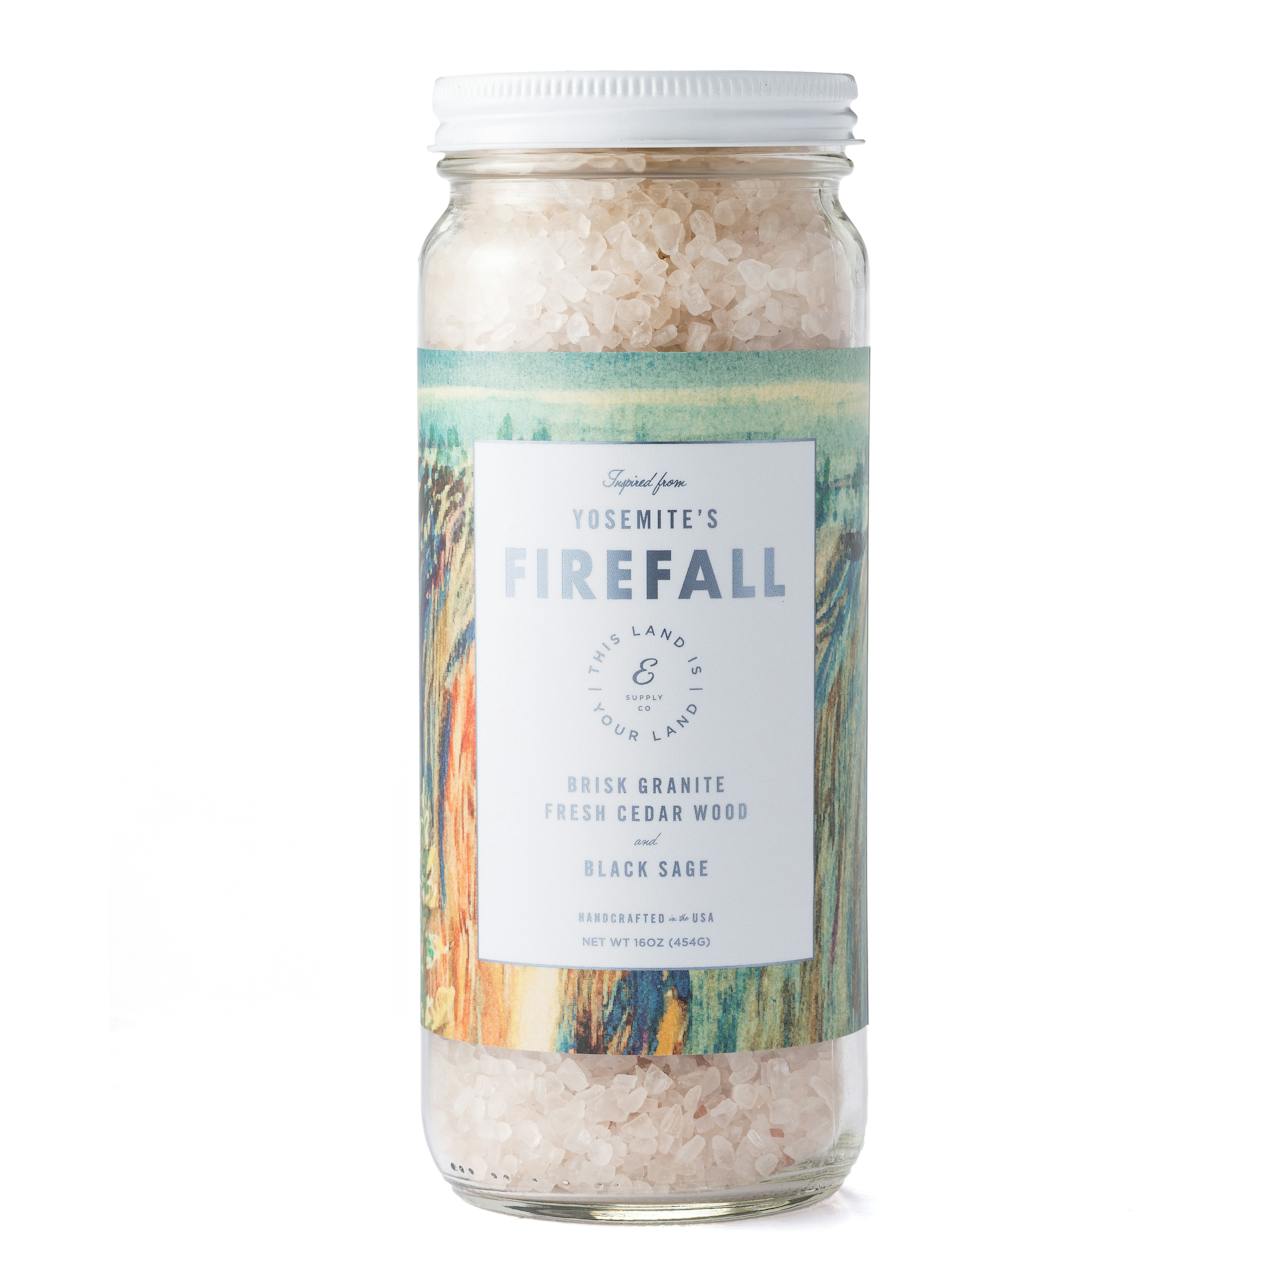 Ethics Supply Co. Firefall Bath Salts